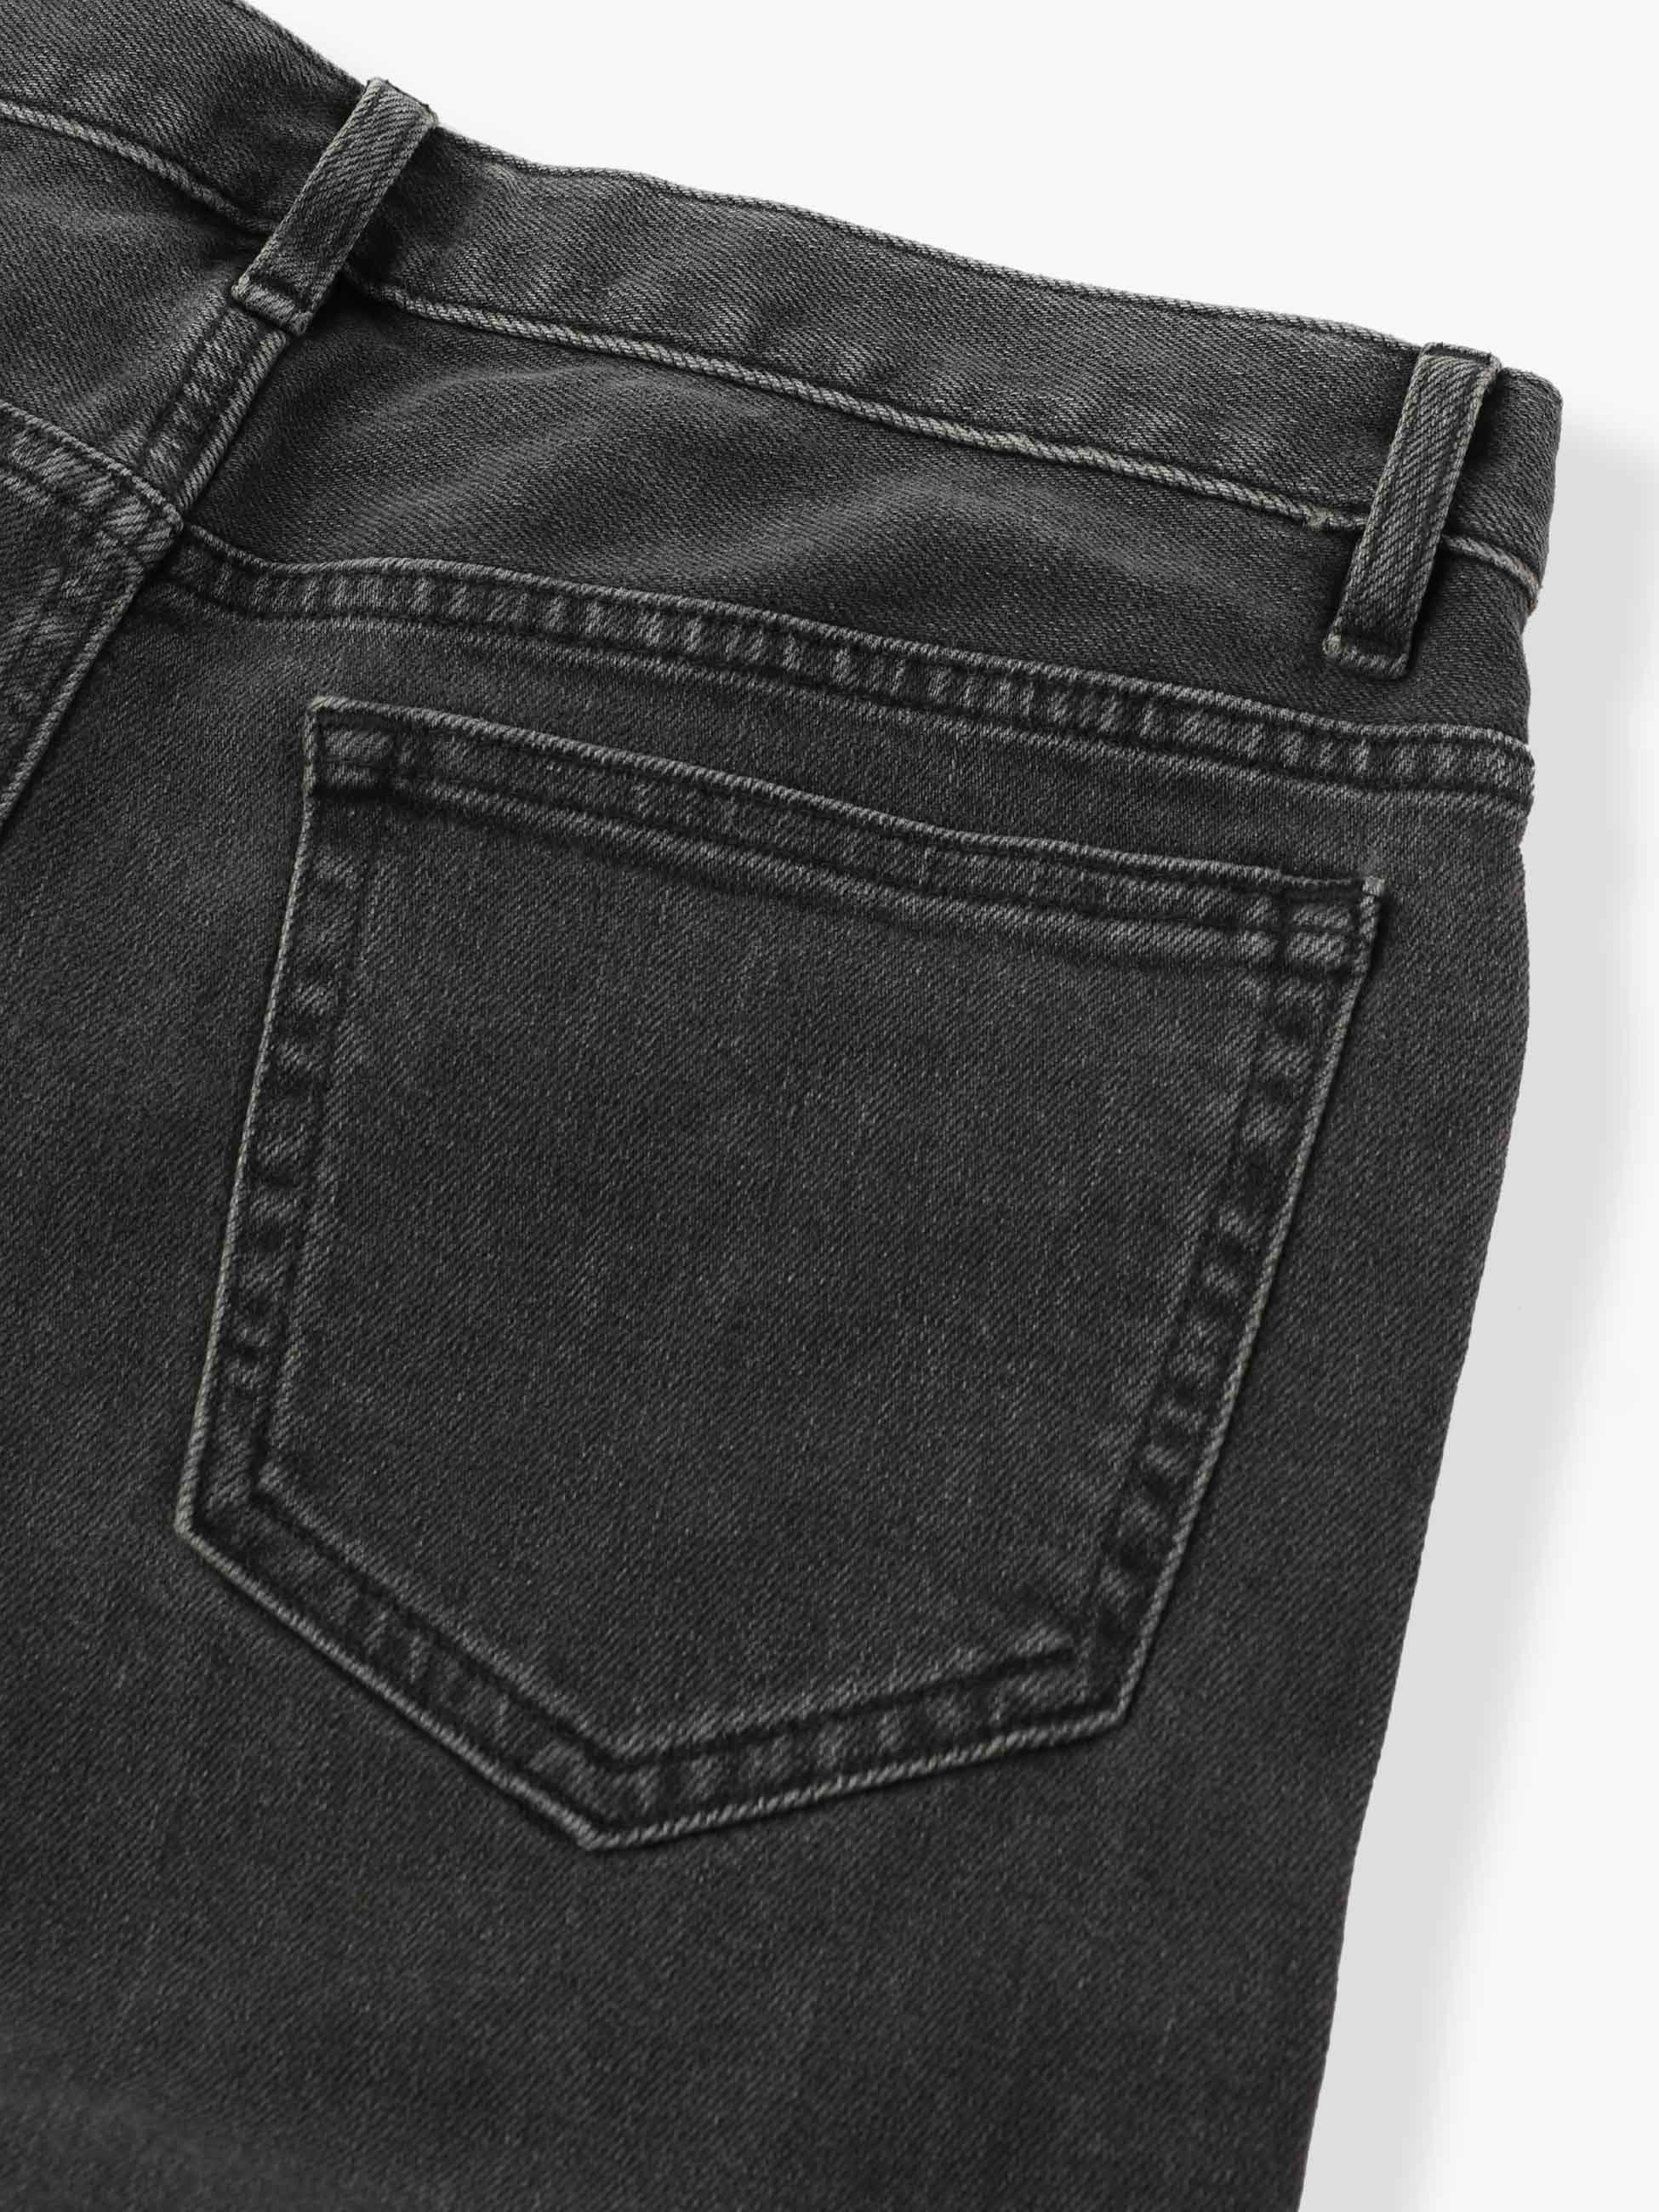 Petite New Standard Black Denim Pants 詳細画像 black 5